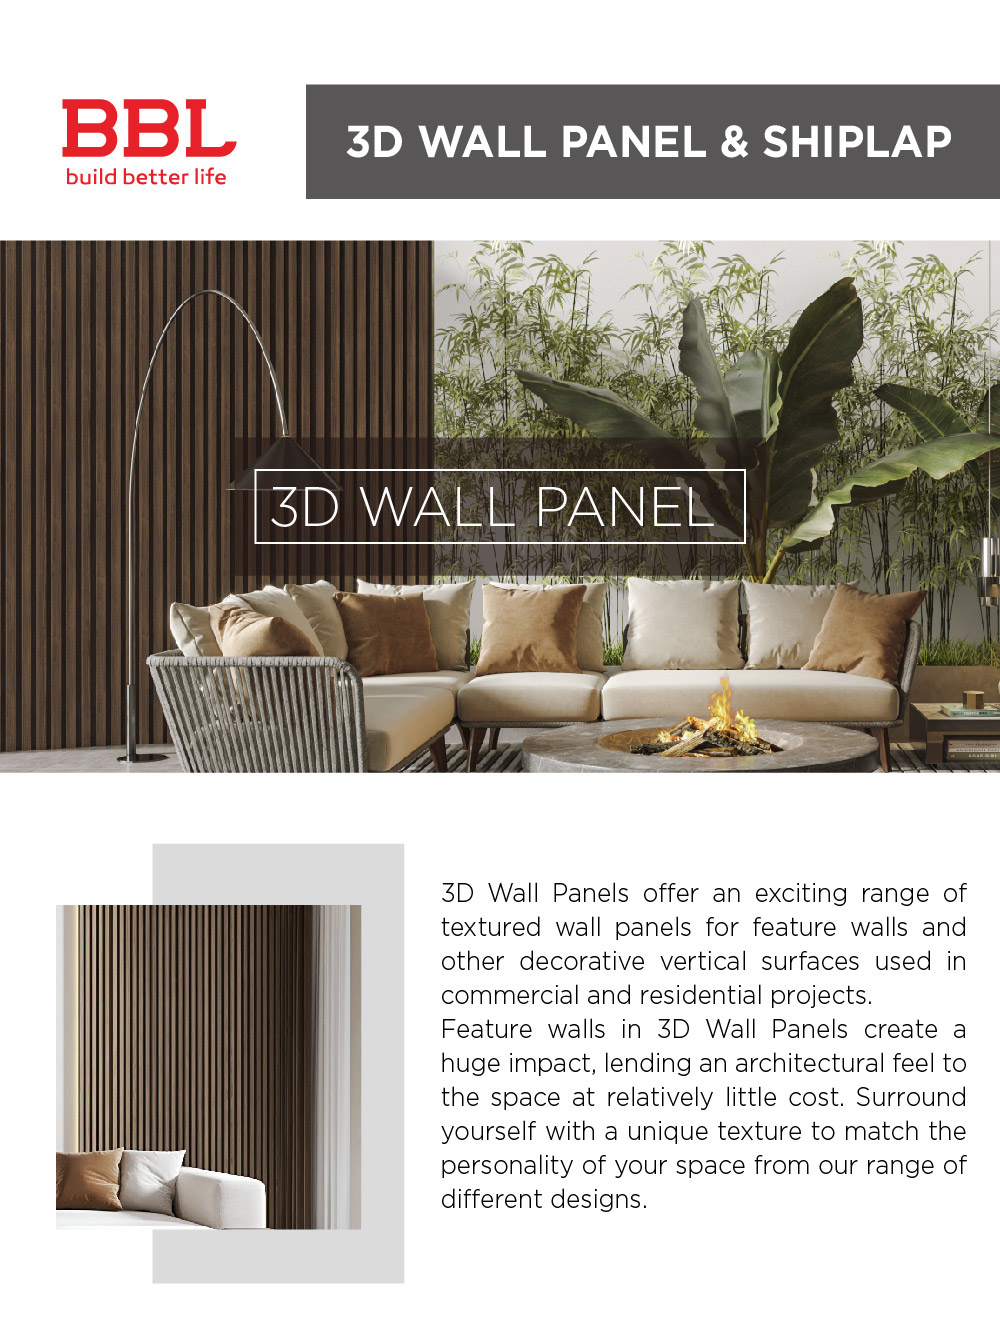 3D Wall Panels & Shiplap